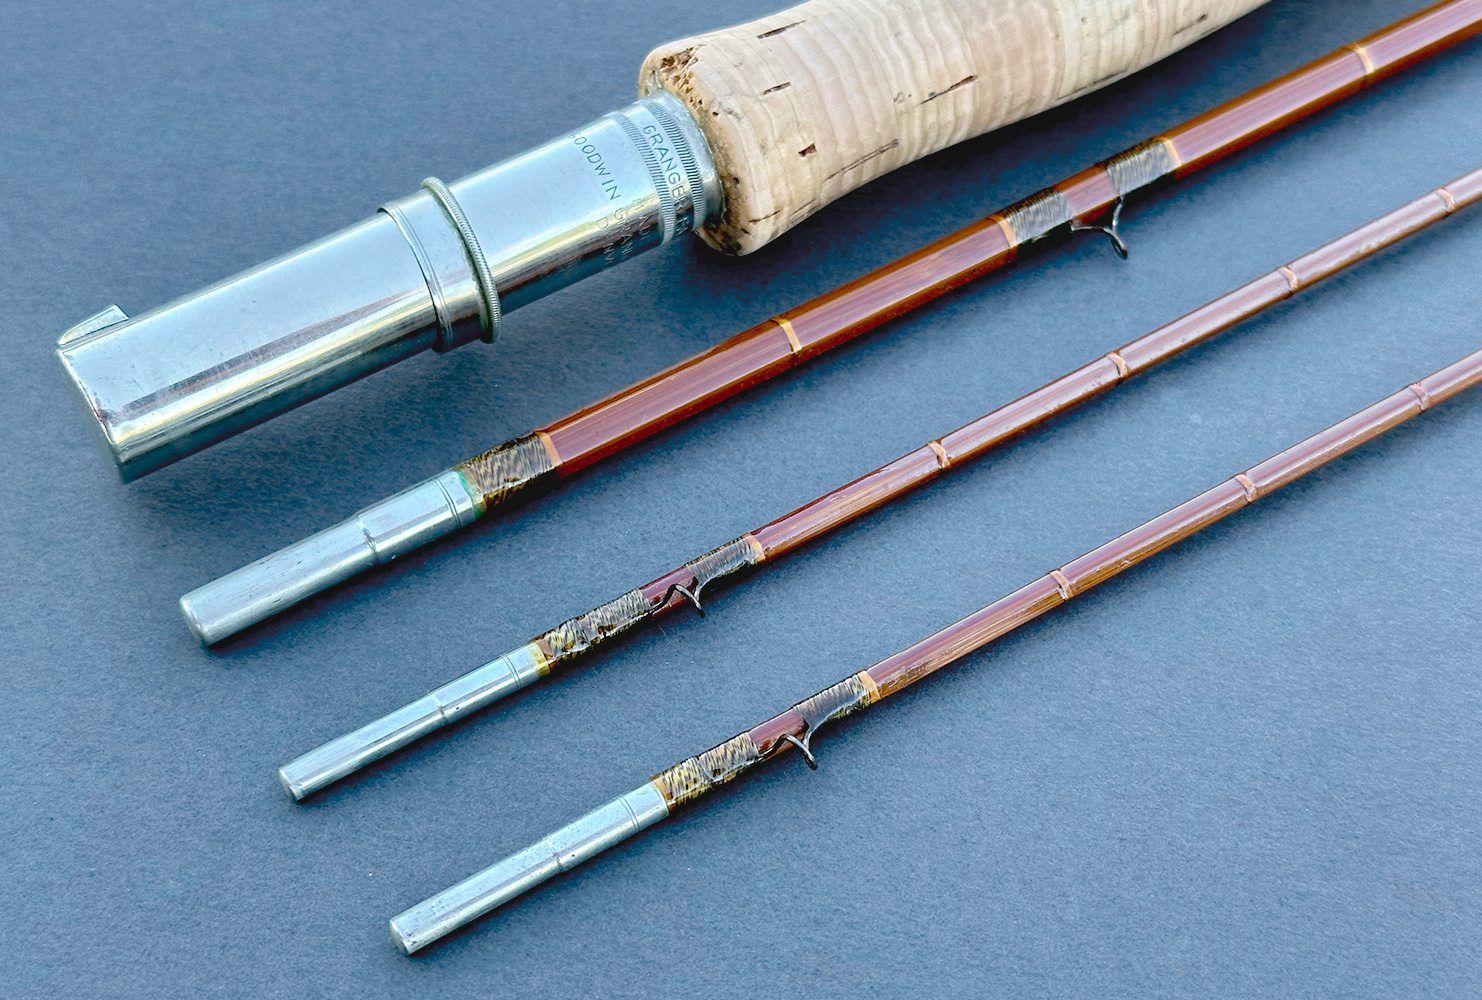 Goodwin Granger - All Goodwin Granger Rods - Bamboo Fly Rods - Finecane